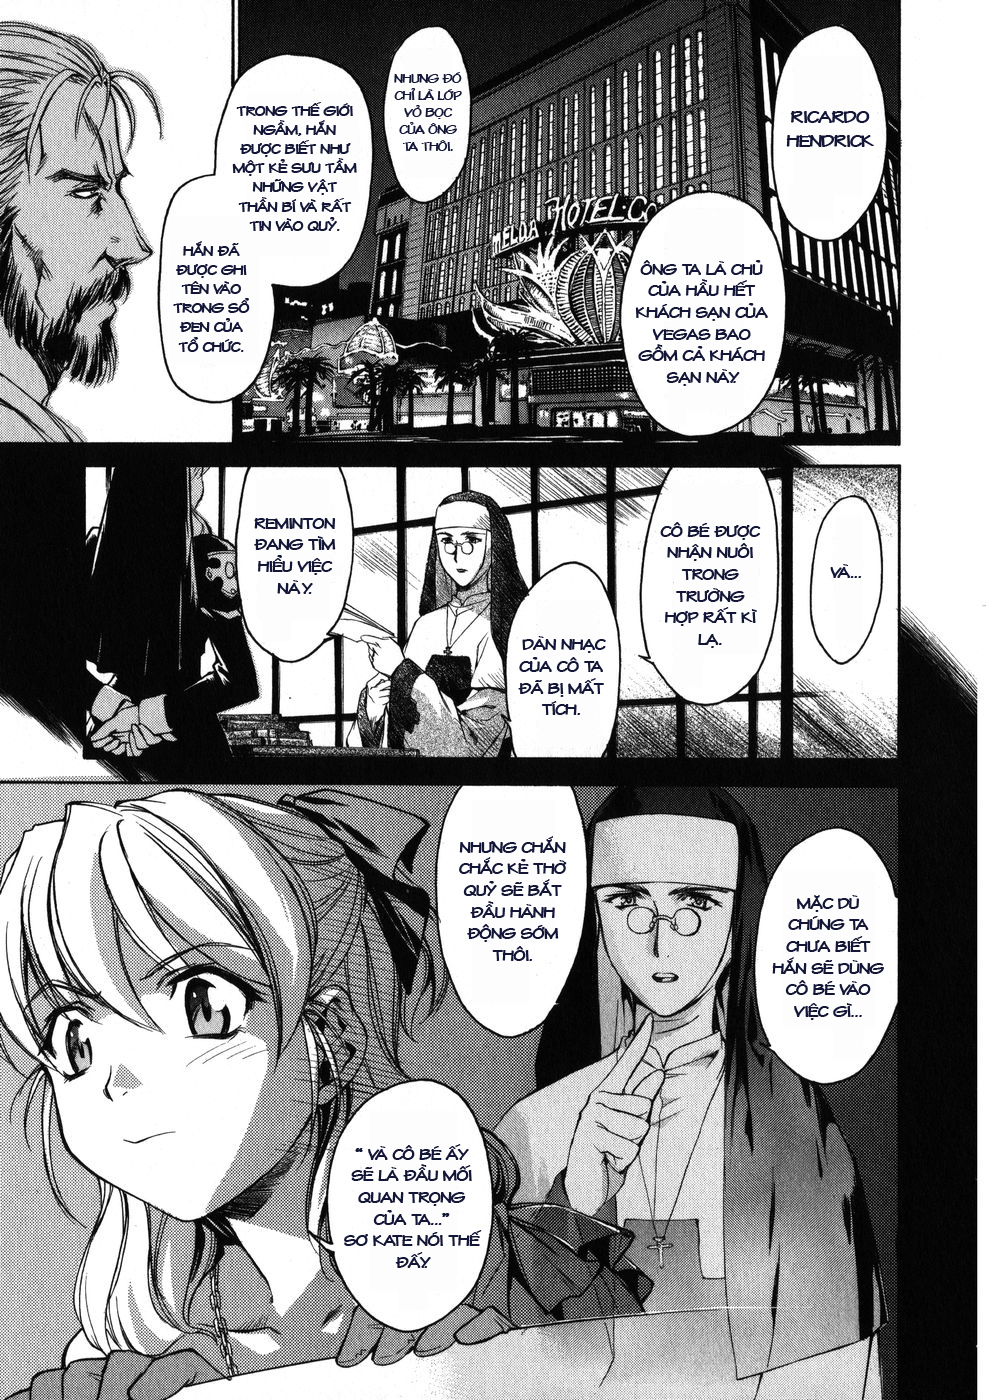 [Manga] Chrono Crusade (Đọc online tại SSF) CHRNO-CRUSADE-01-067